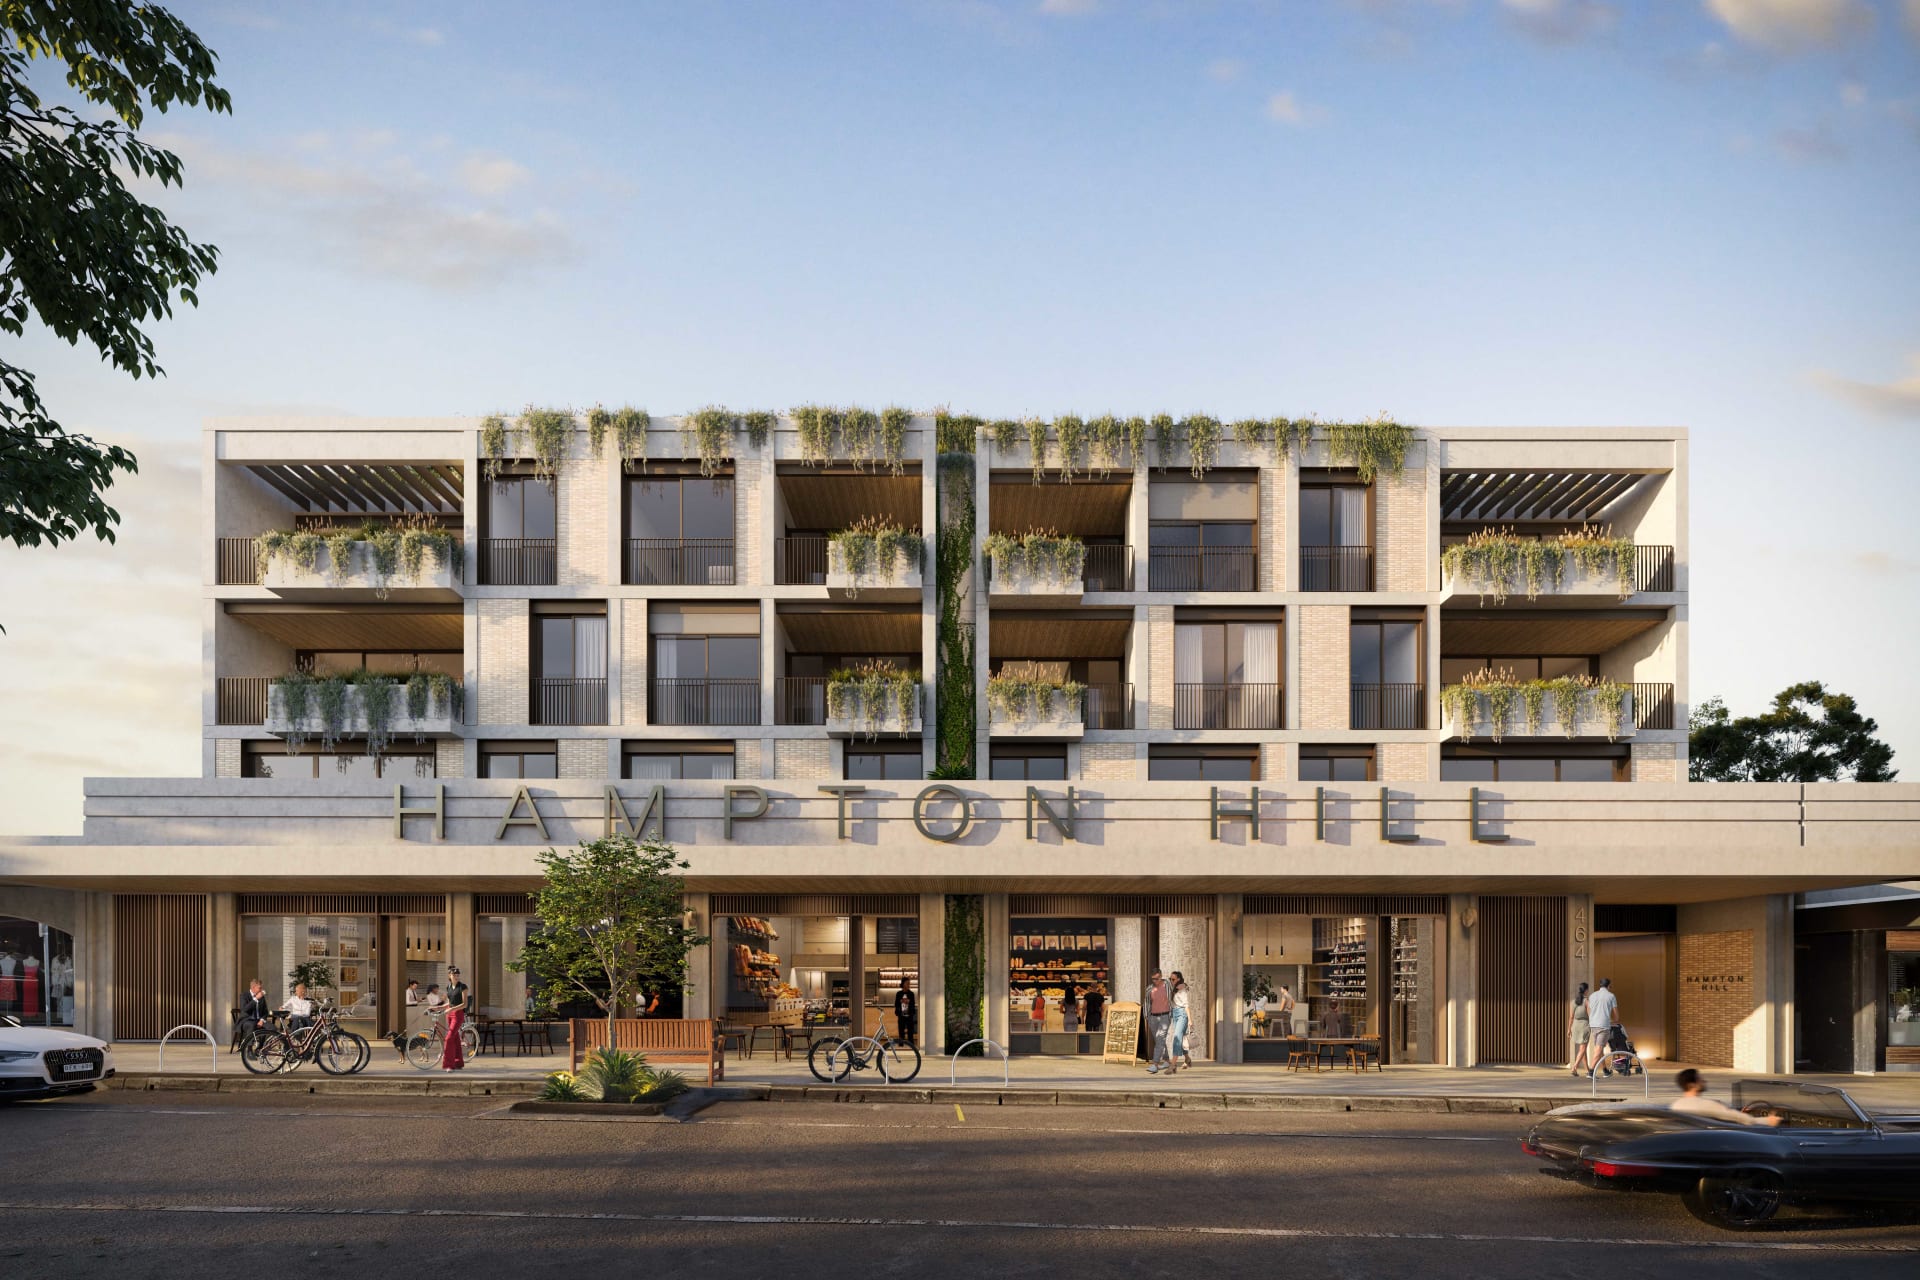 Lowe Living secured 65% of sales at Woods Bagot-designed Hampton Hill apartment development